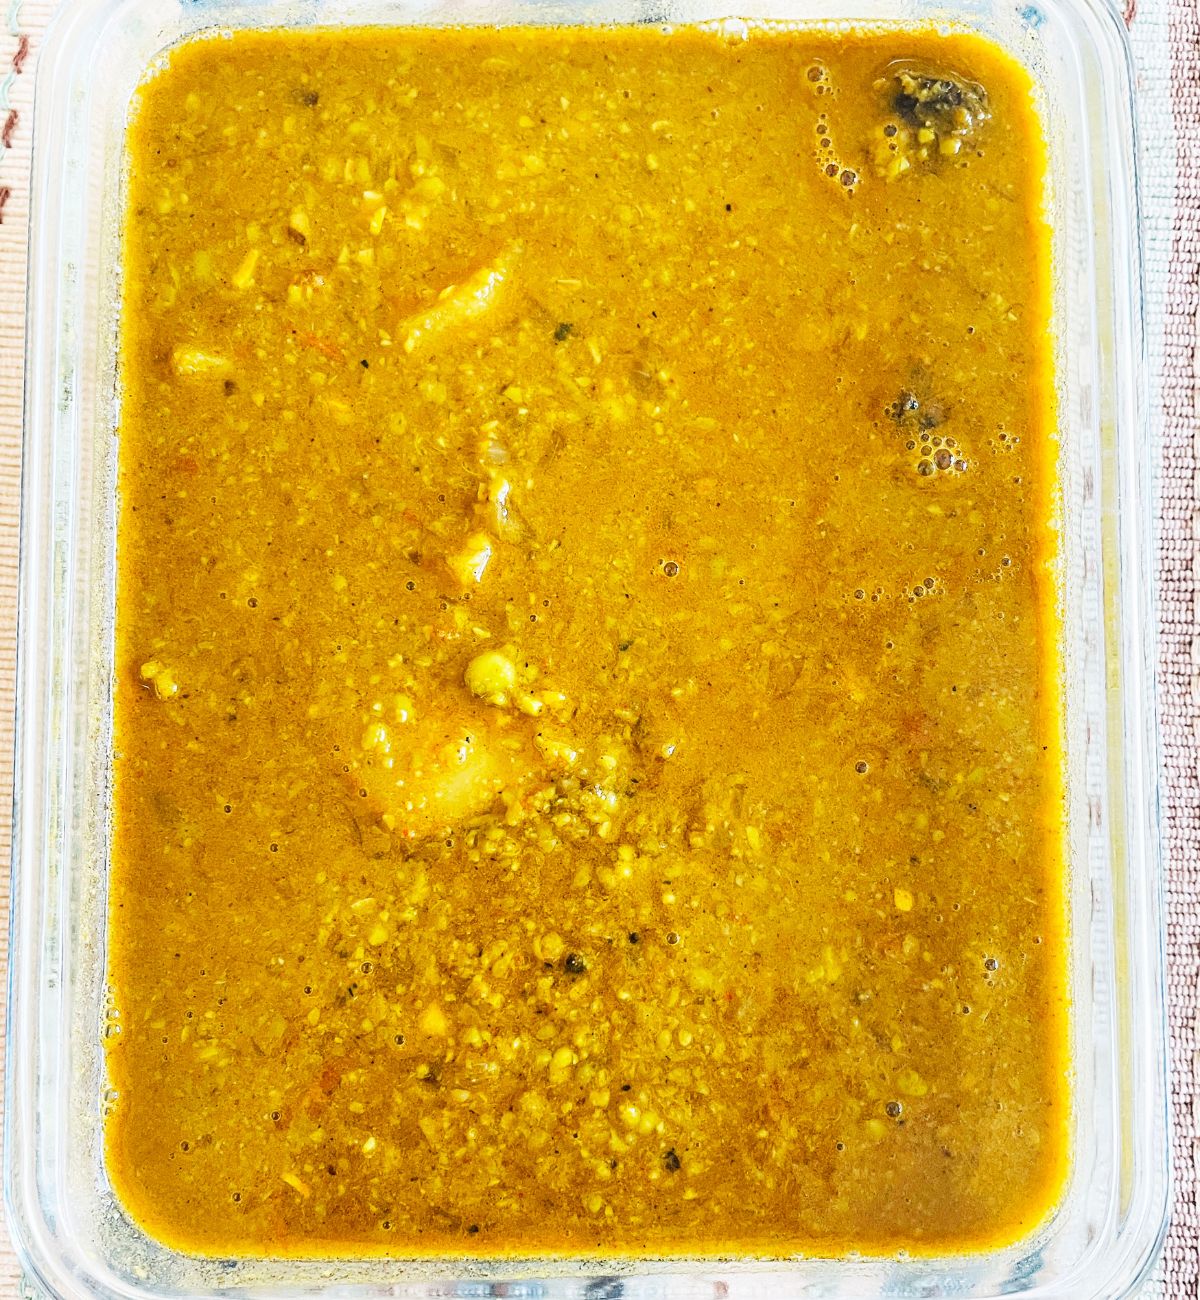 Brown yellow matar ka nimona with peas and potatoes in a recatangular glass serving bowl